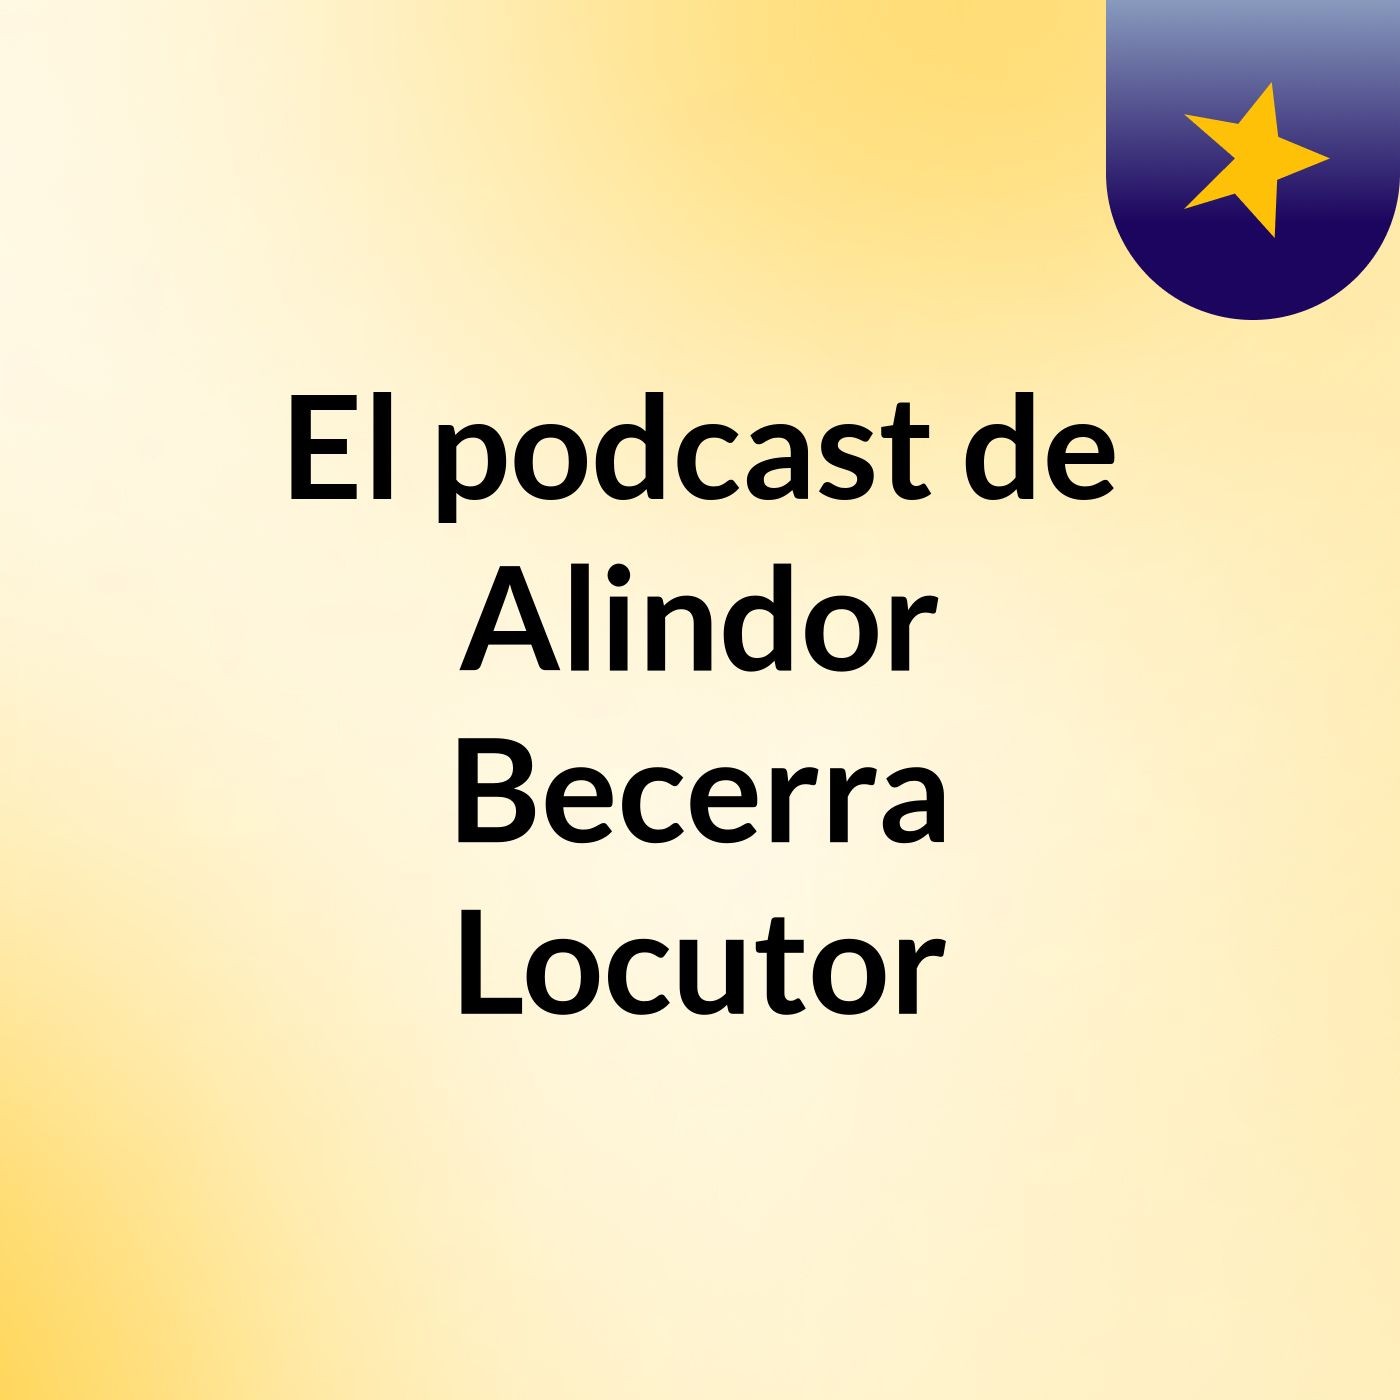 El podcast de Alindor Becerra Locutor